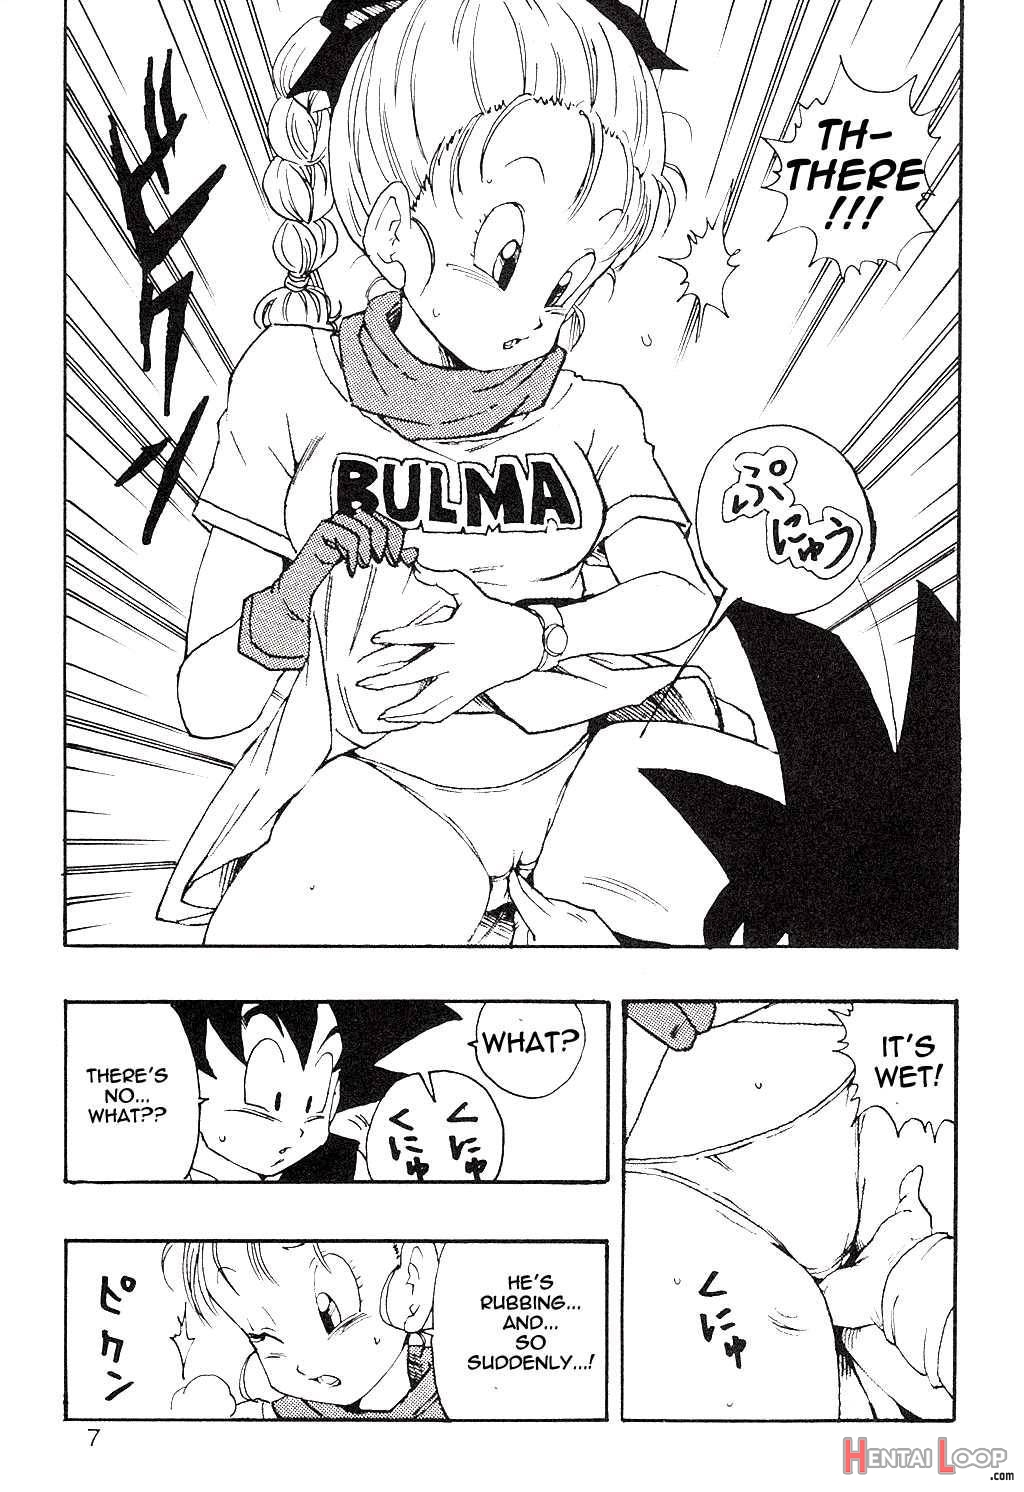 Dragon Ball Eb 1 - Episode Of Bulma page 7